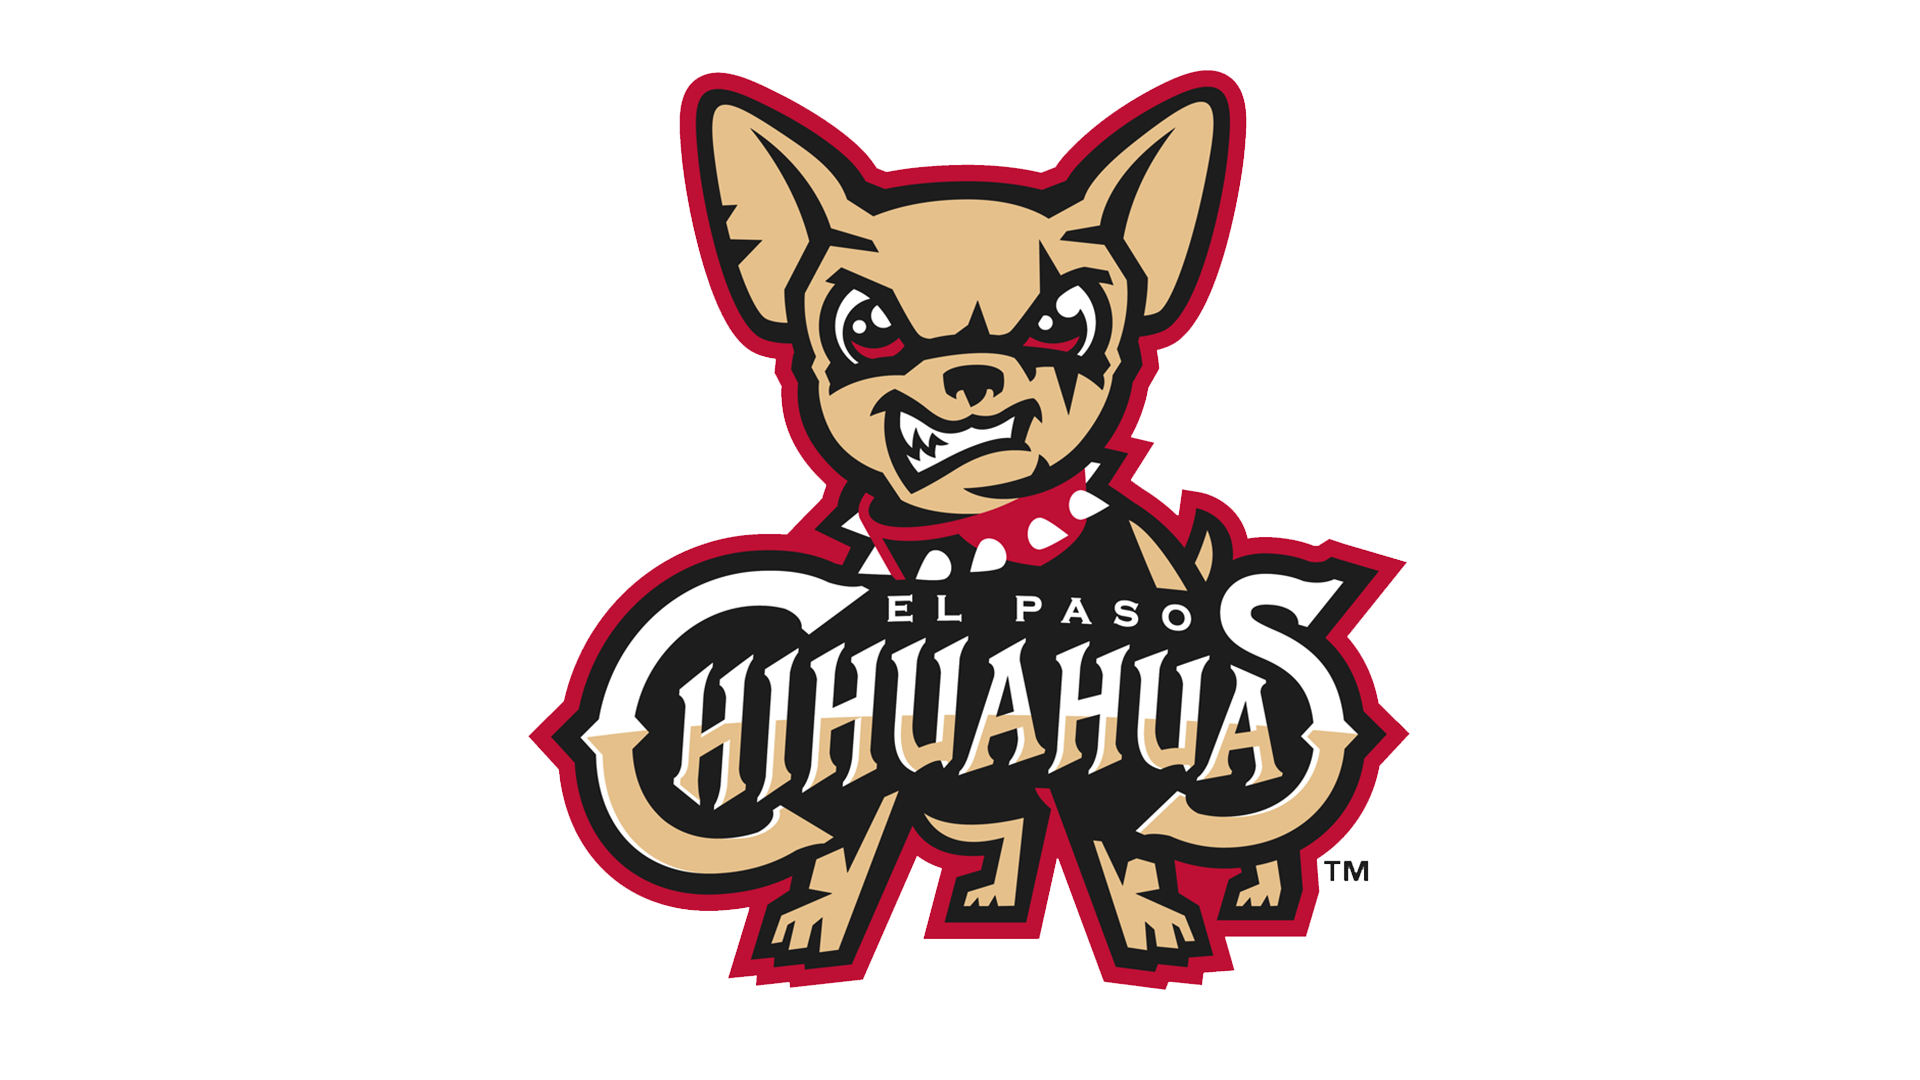 El Paso Chihuahuas introduce new alternate logos – SportsLogos.Net News